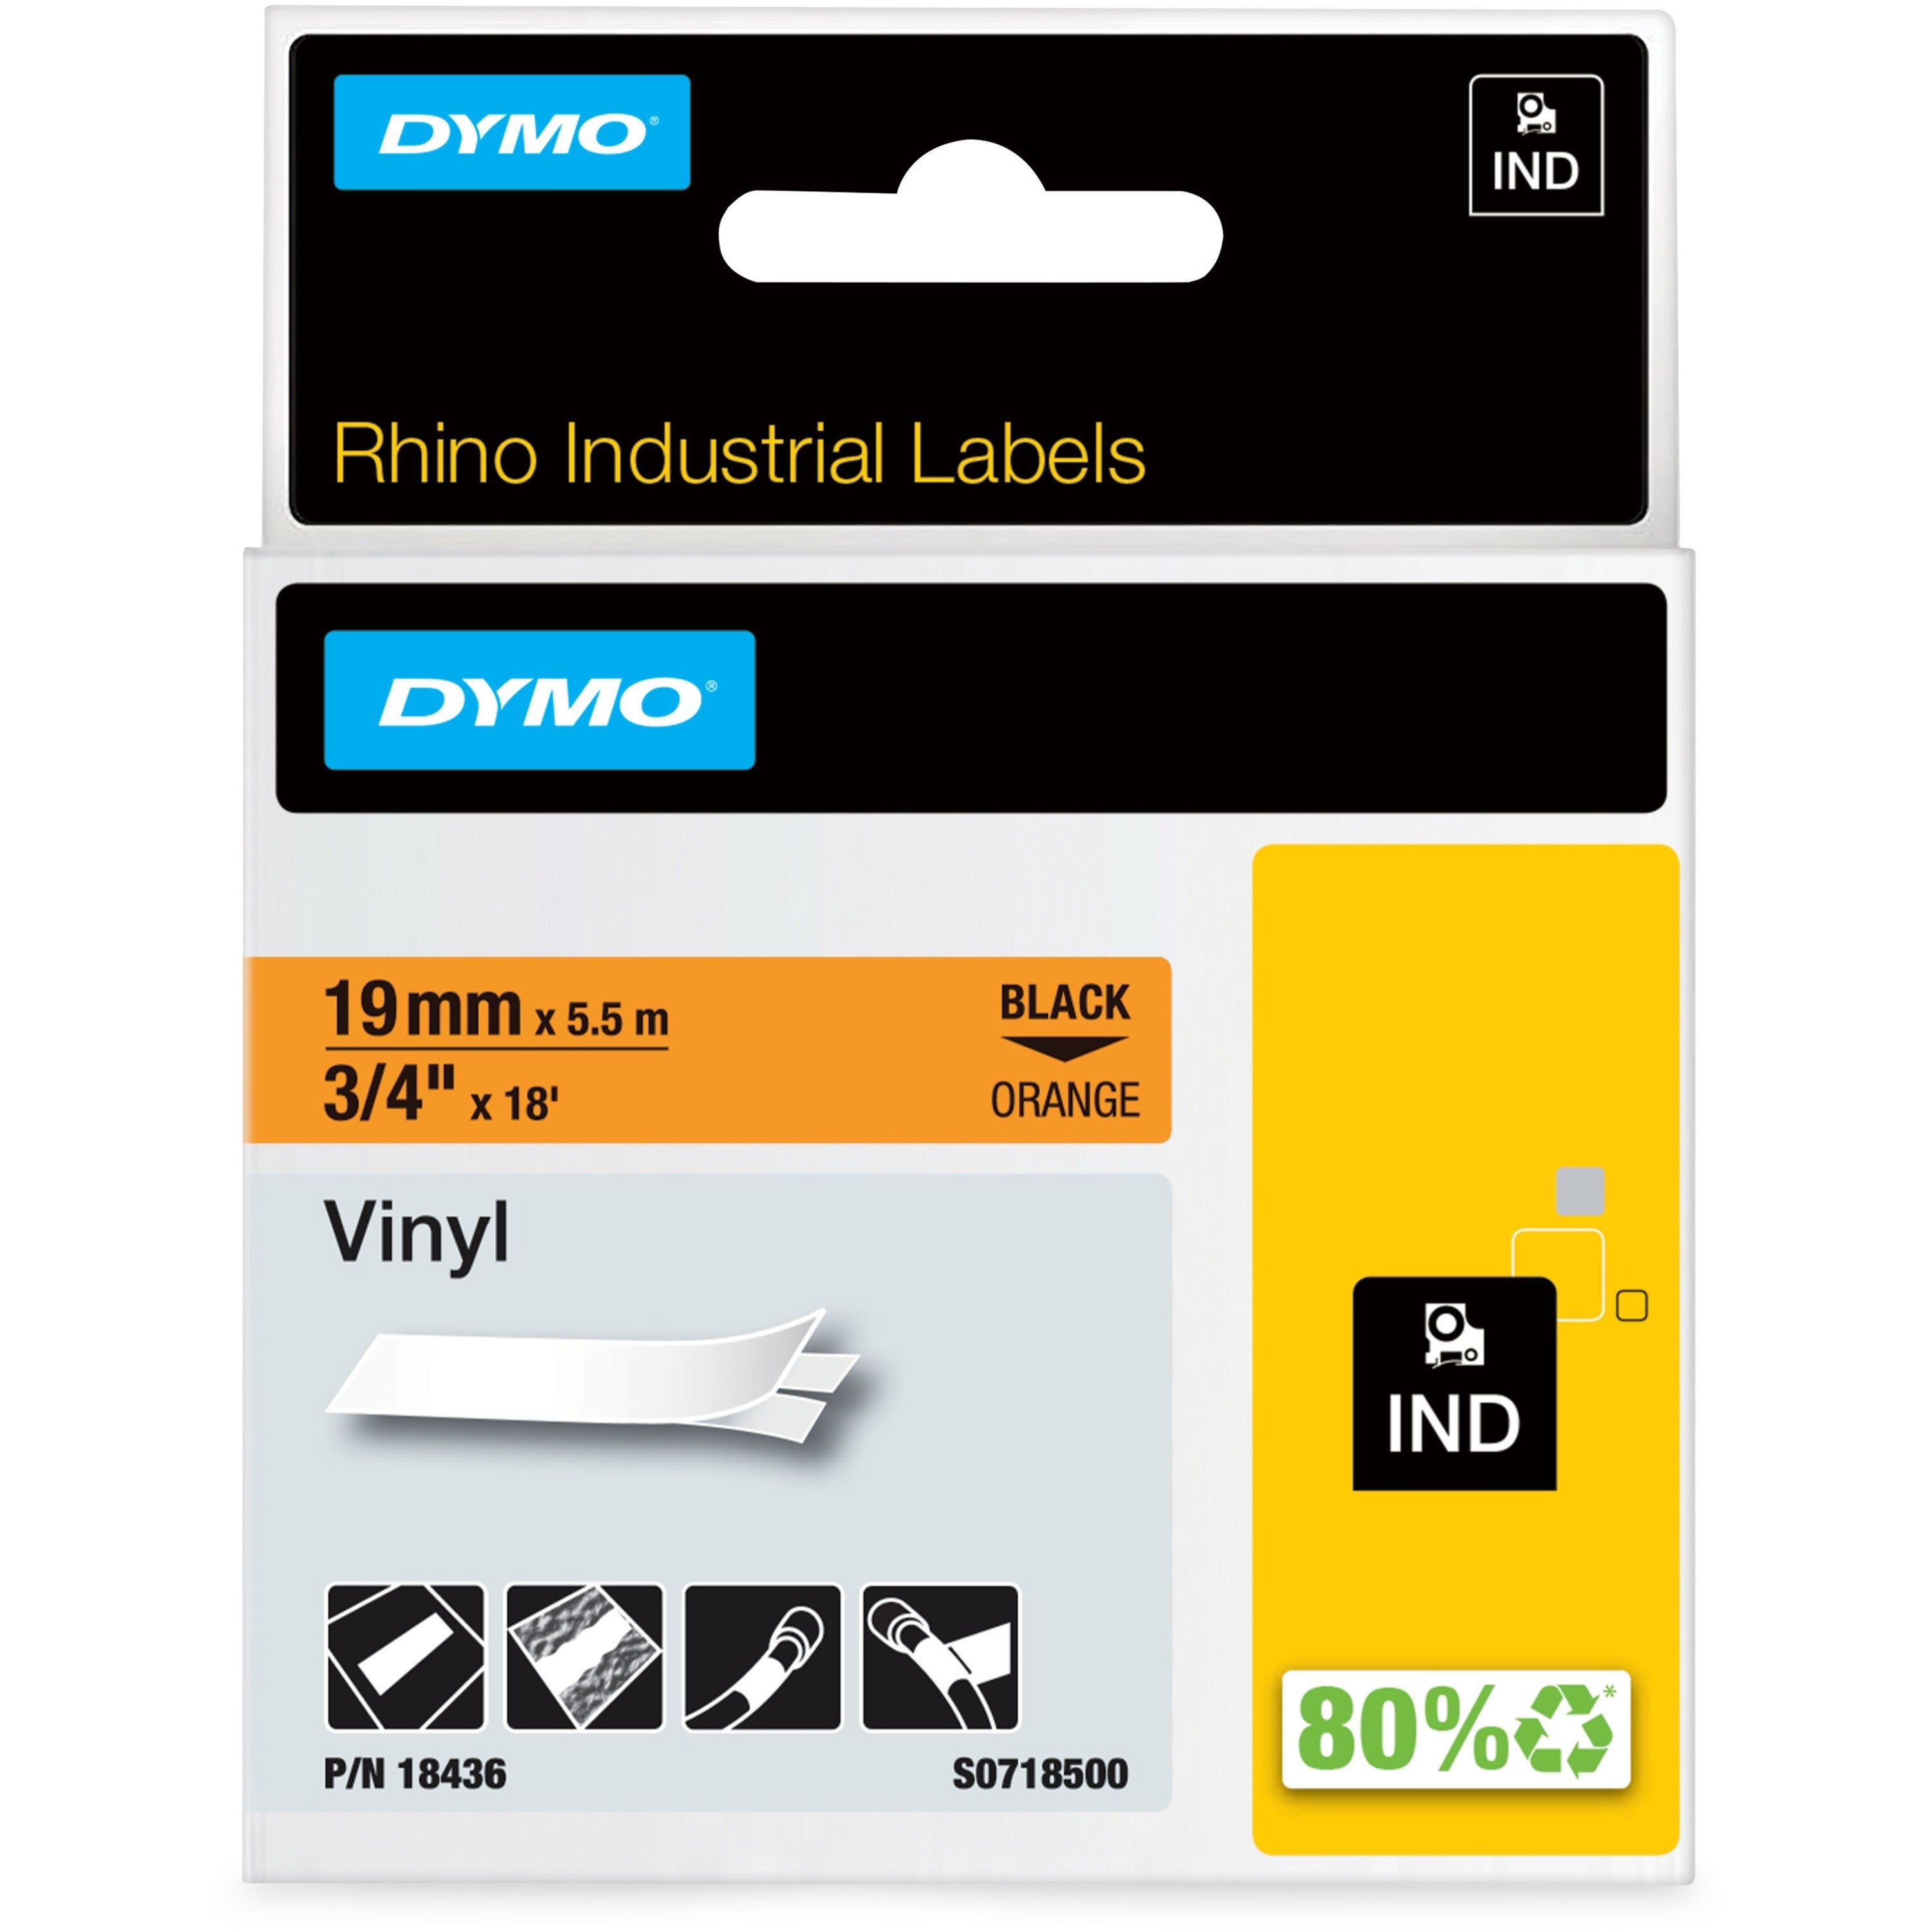 Dymo Colored Industrial Rhino Vinyl Labels - 3/4" Length - Black - Vinyl - 1 Each - 